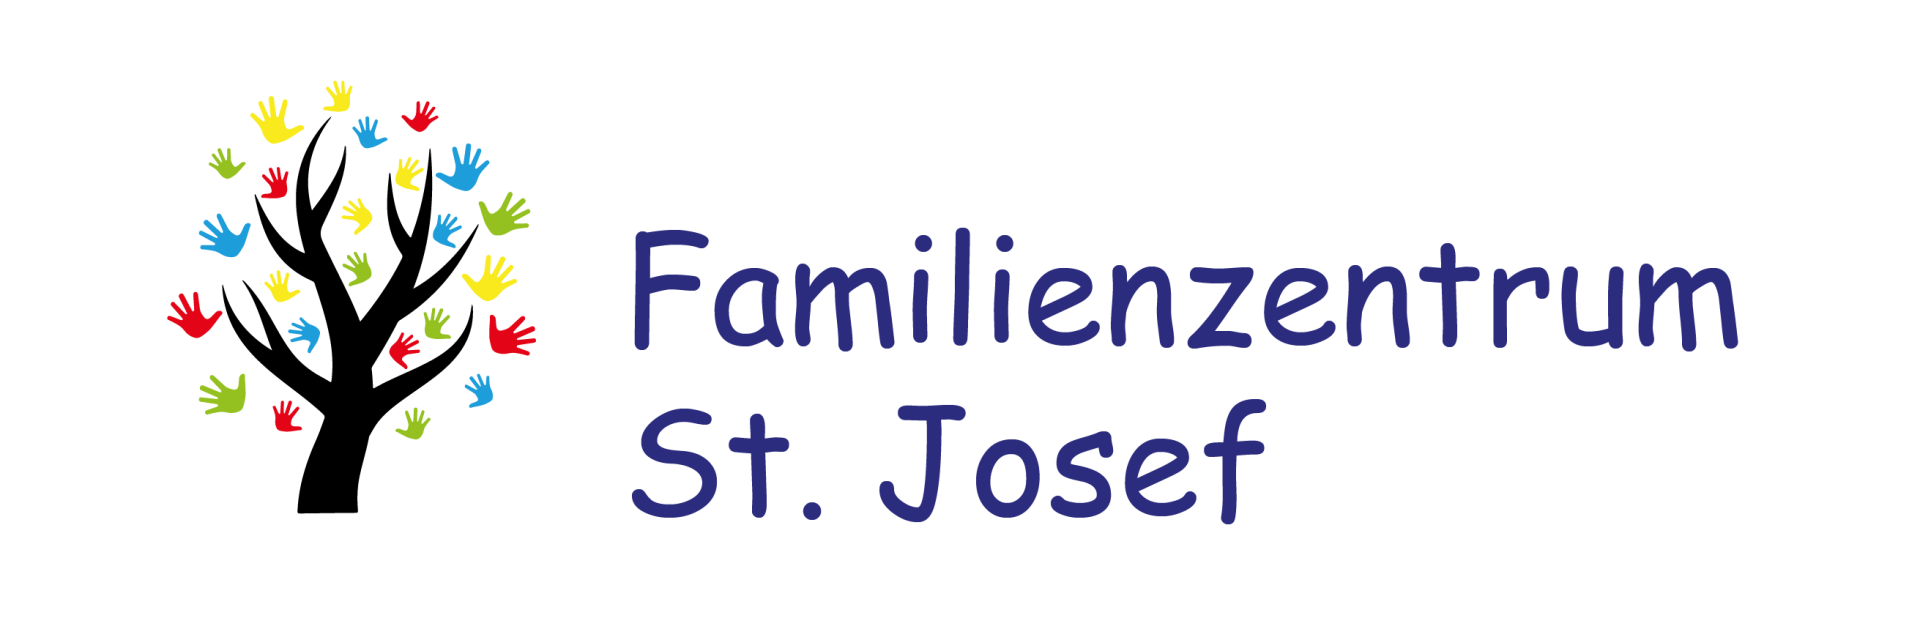 Familienzentrum St. Josef